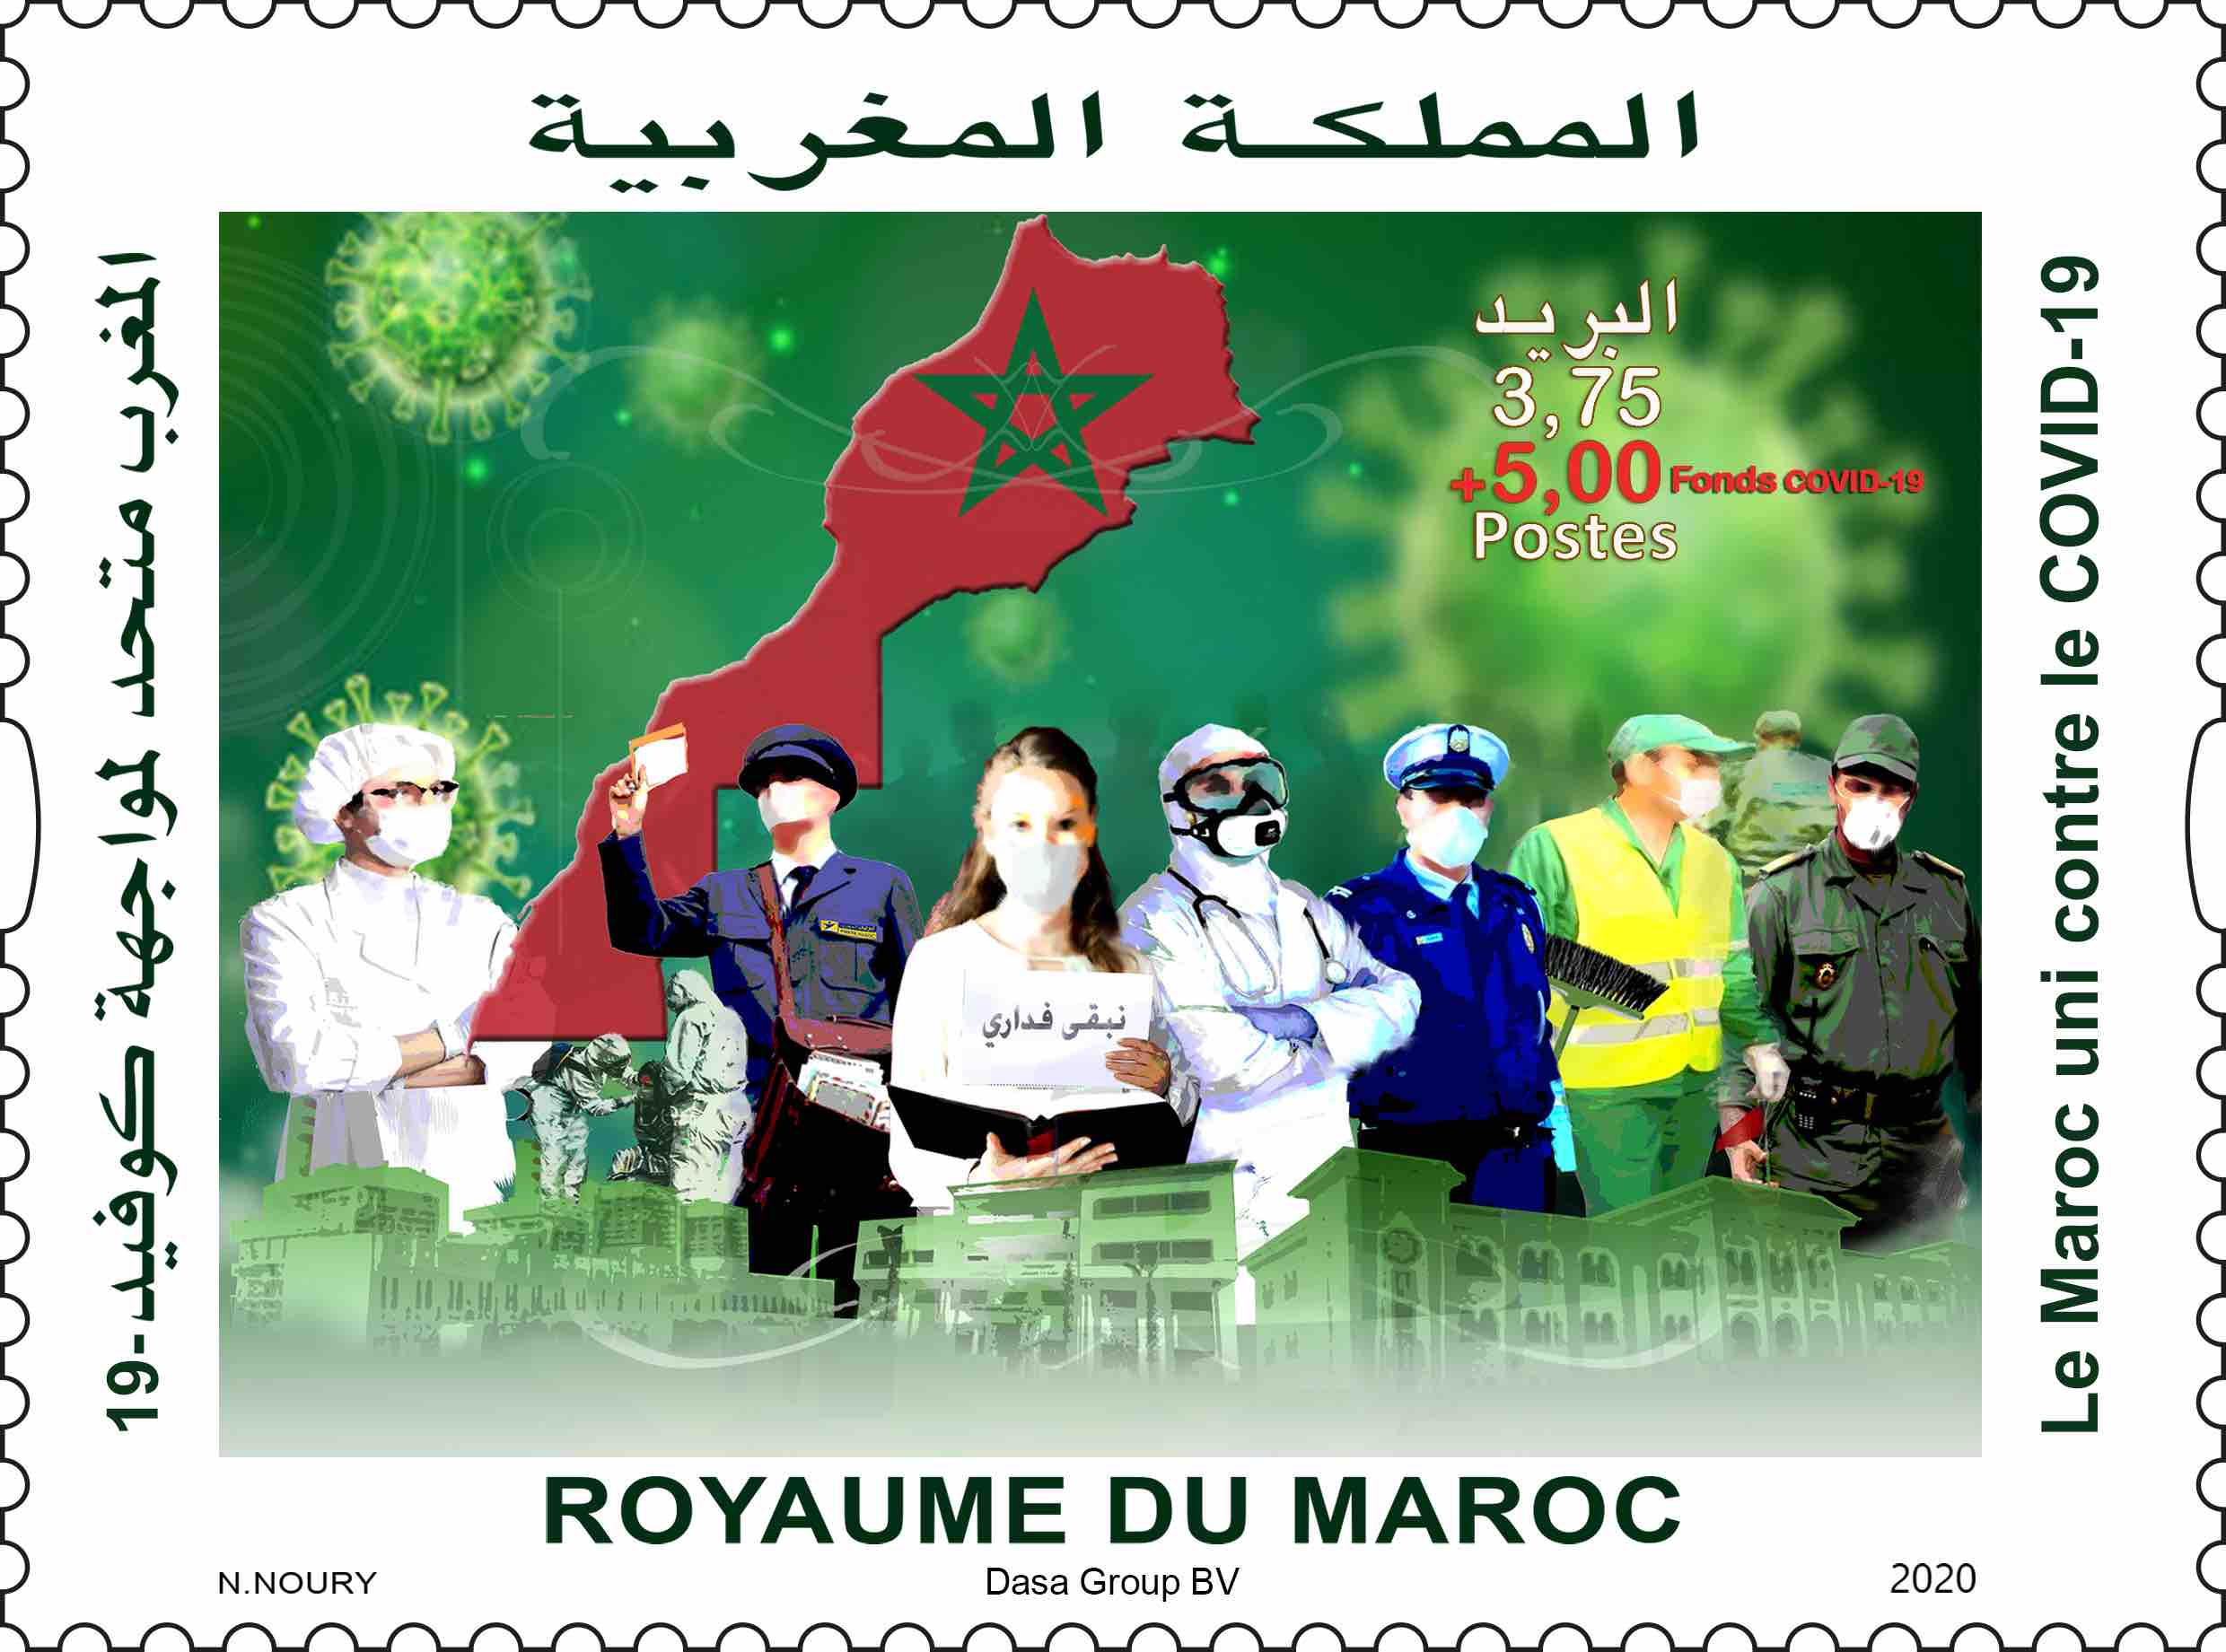 Barid Al-Maghrib émet un timbre-poste en hommage à ceux qui luttent contre le COVID-19